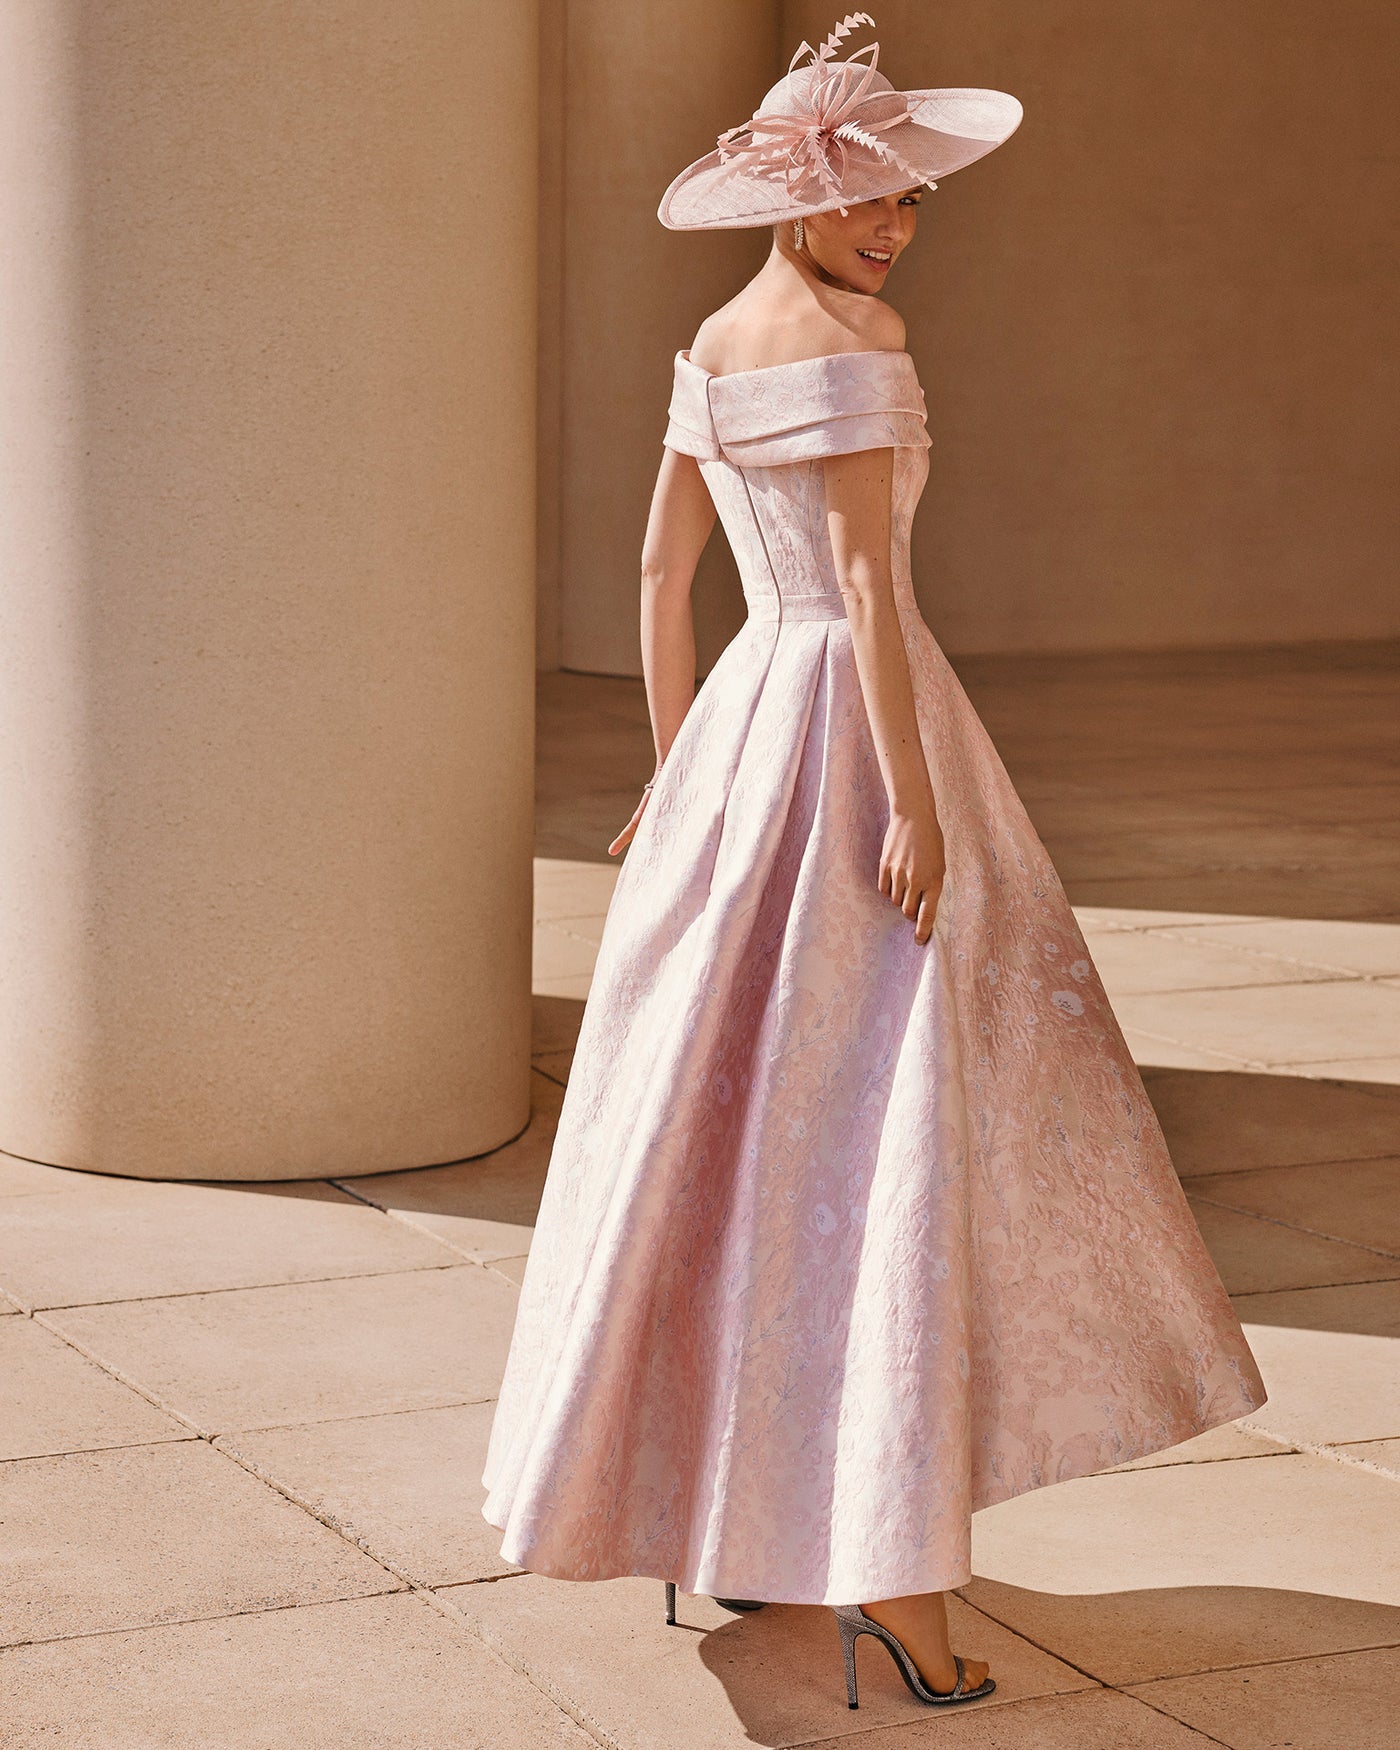 Soft Pink Dress With Floral Design